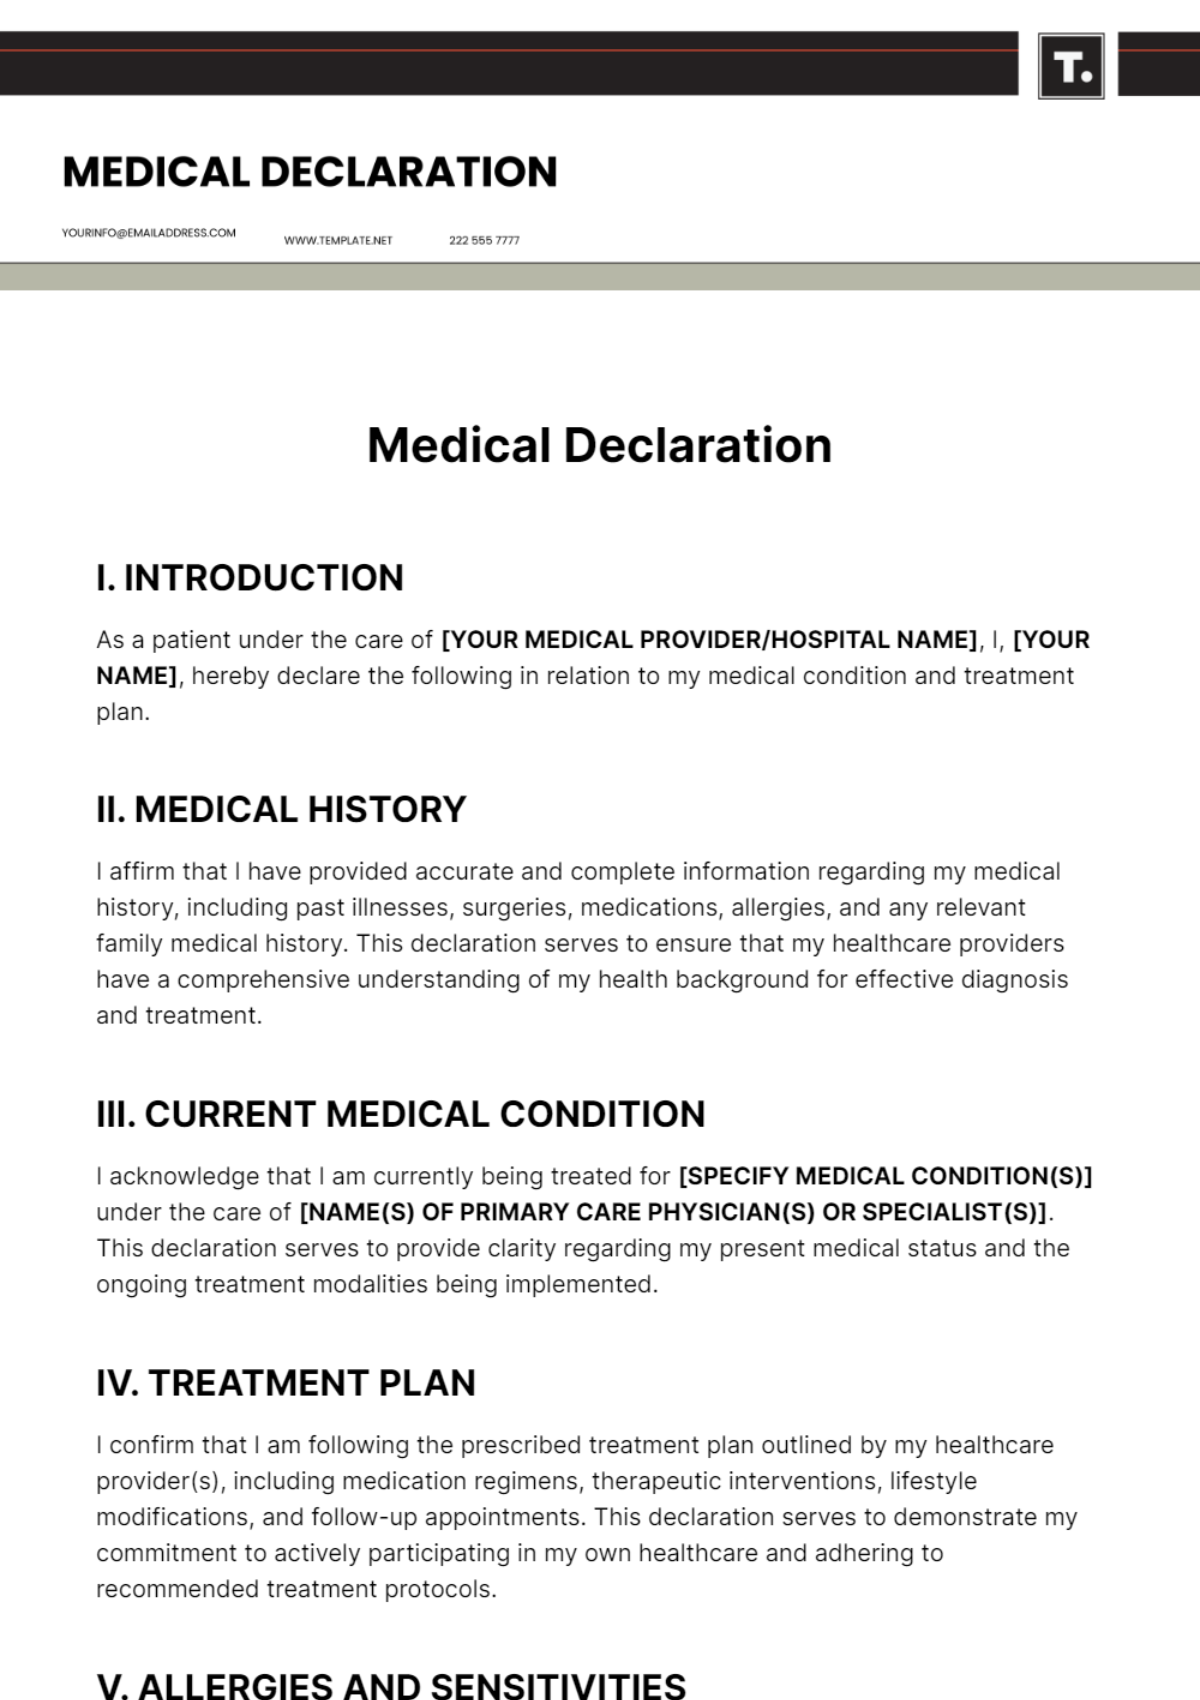 Medical Declaration Template